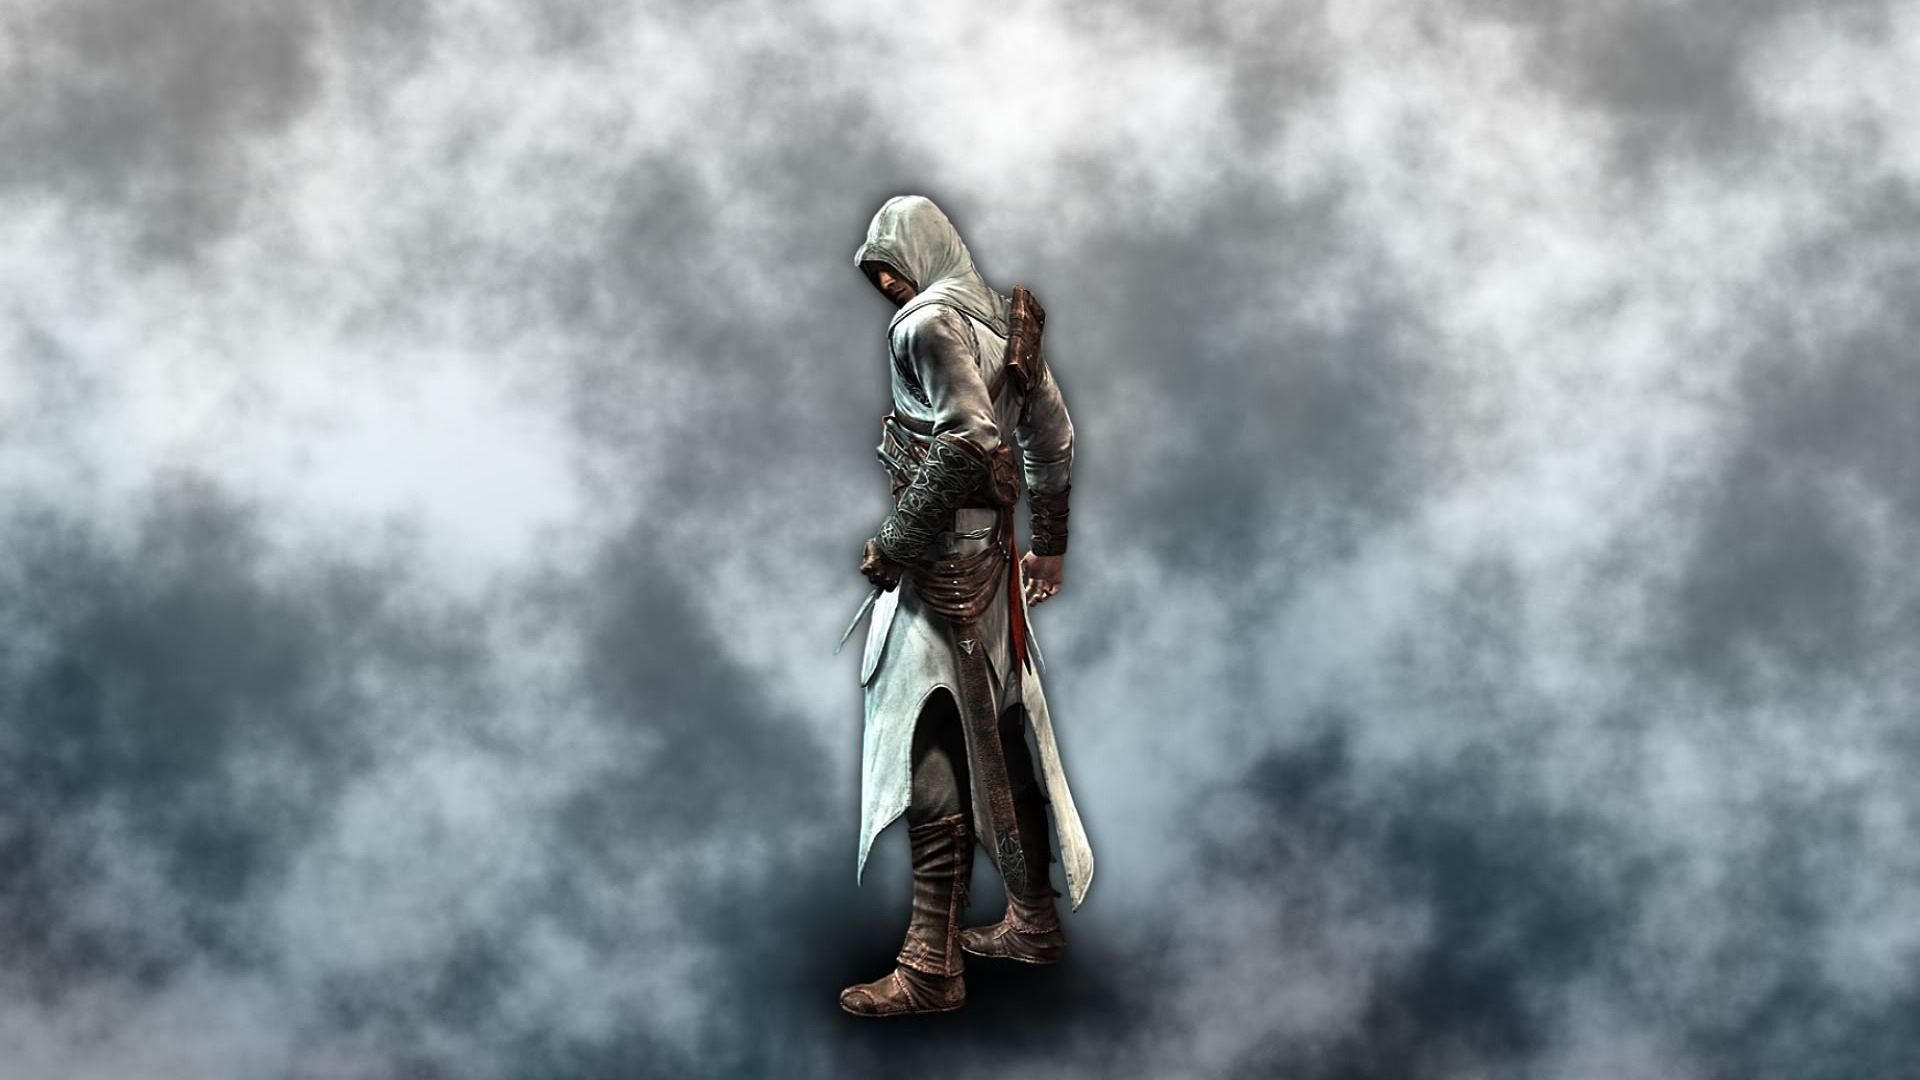 assassin's creed wallpaper,cg artwork,fictional character,photography,screenshot,digital compositing